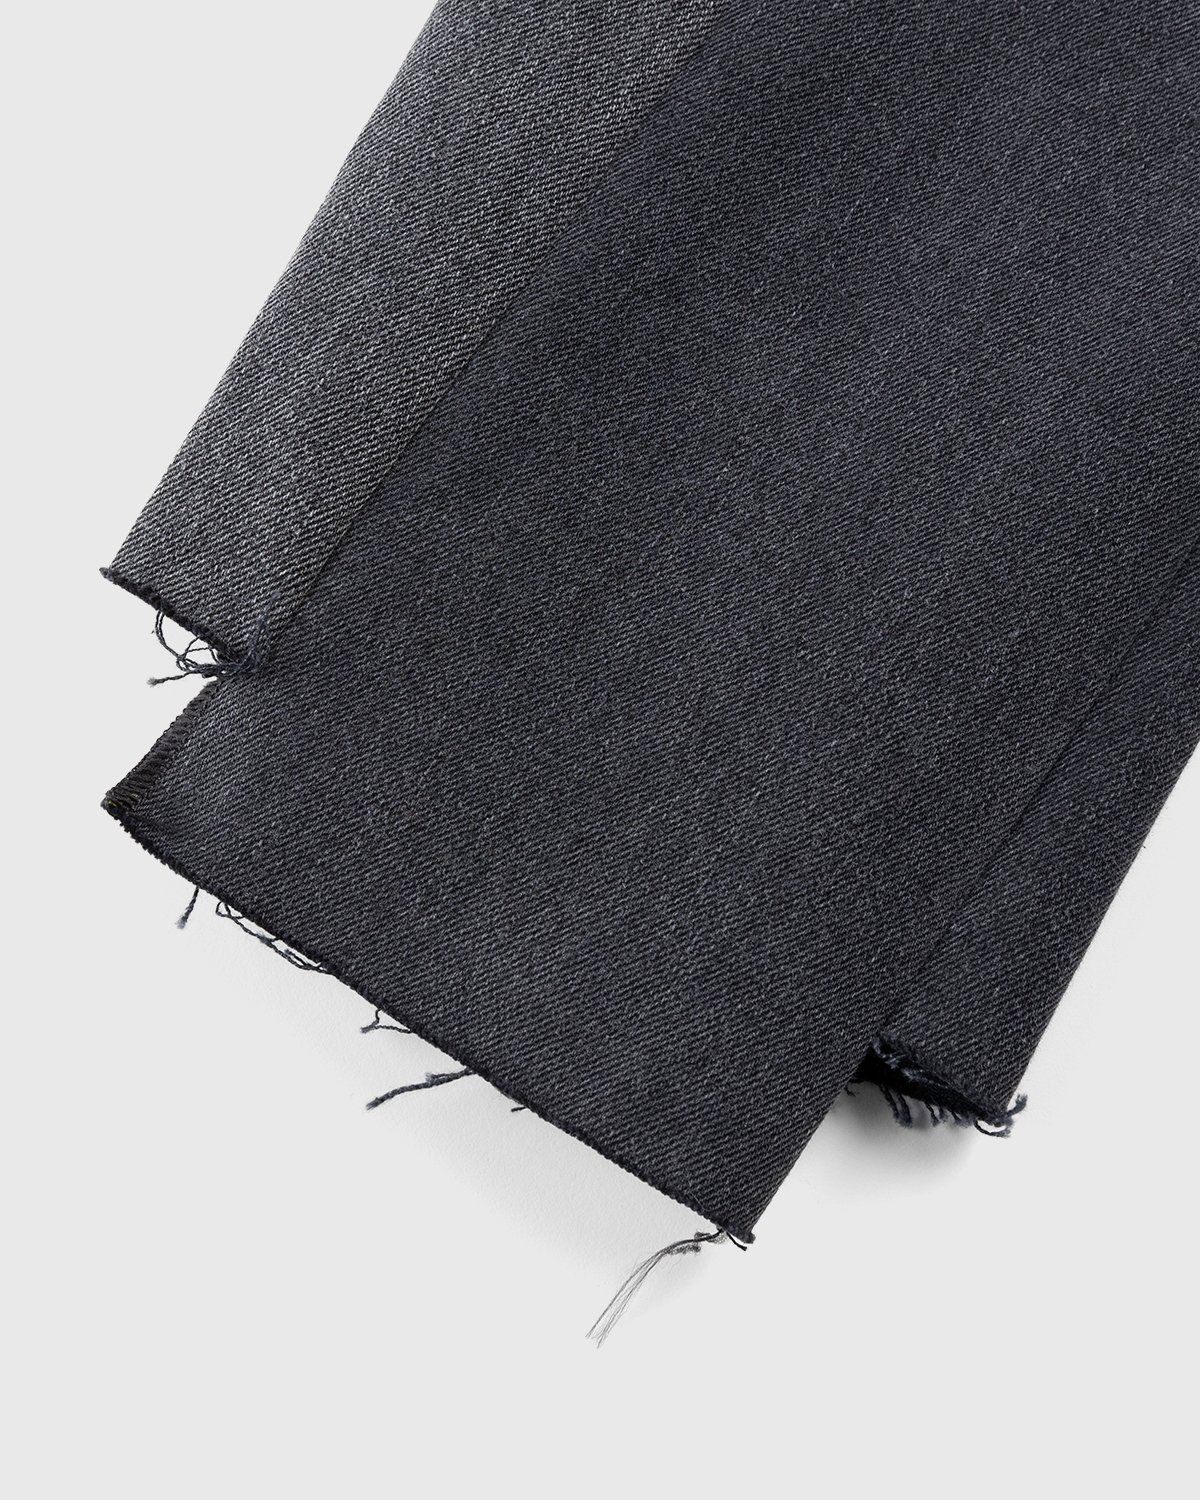 Maison Margiela – Spliced Jeans Black - Denim - Black - Image 4